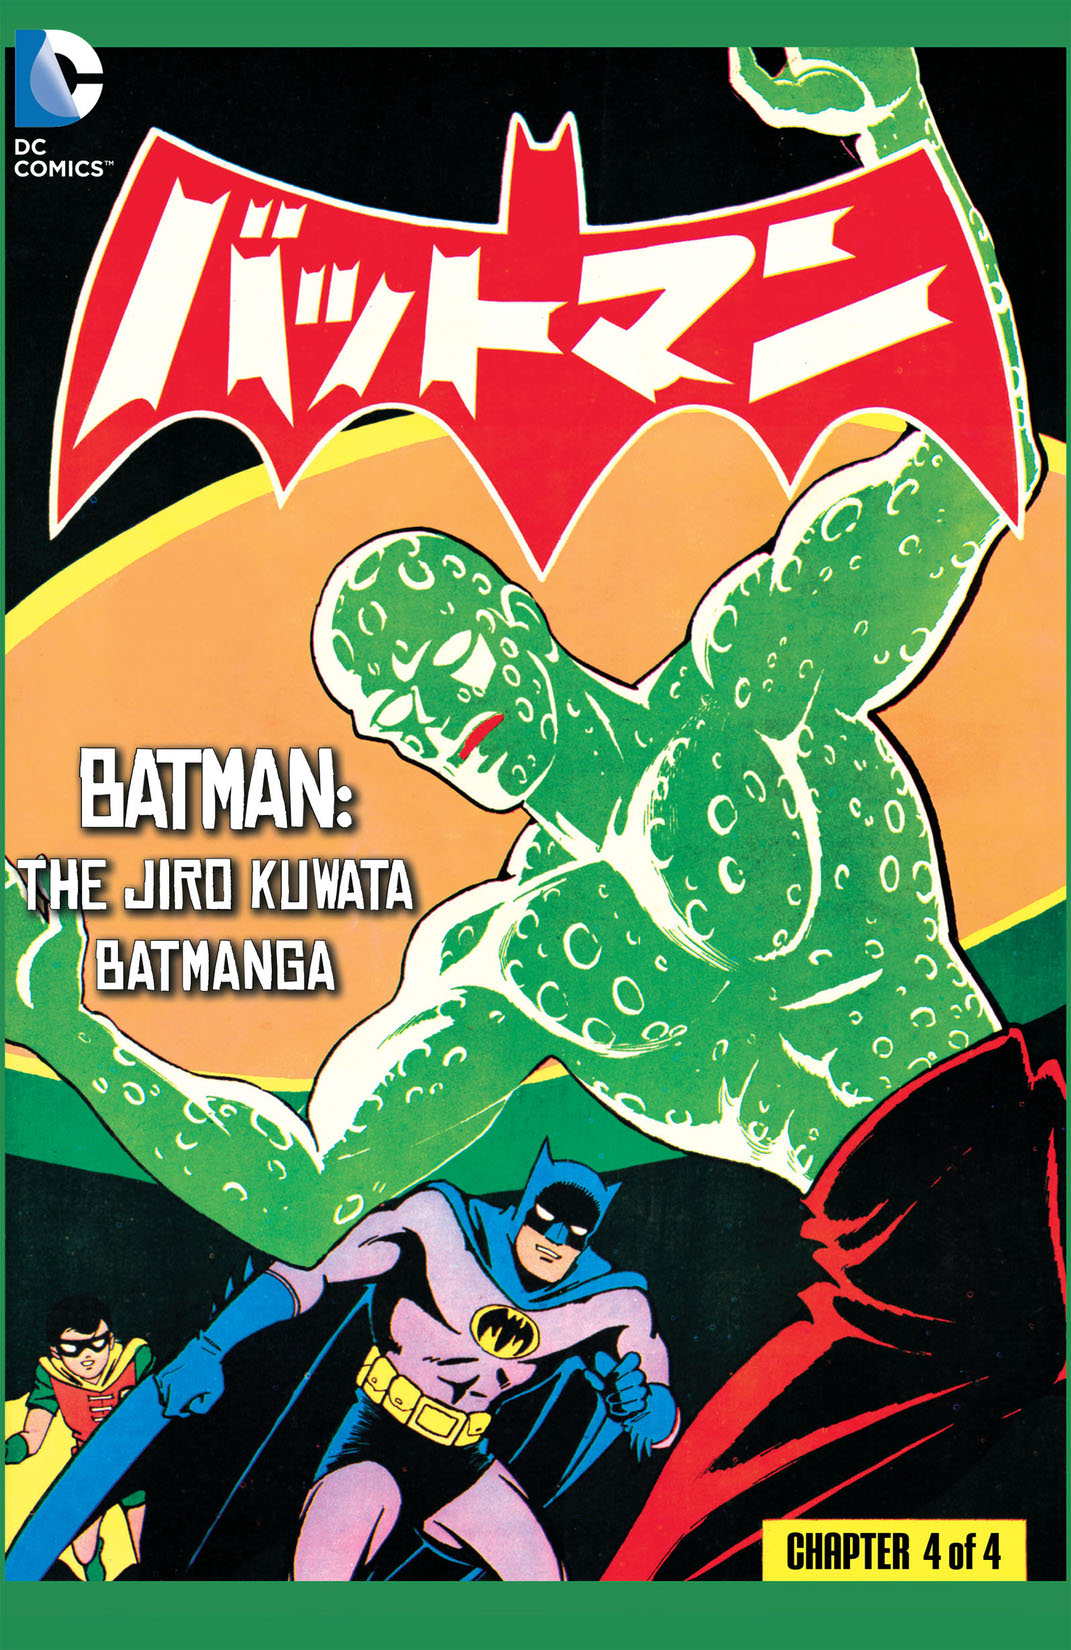 Batman: The Jiro Kuwata Batmanga #34 preview images